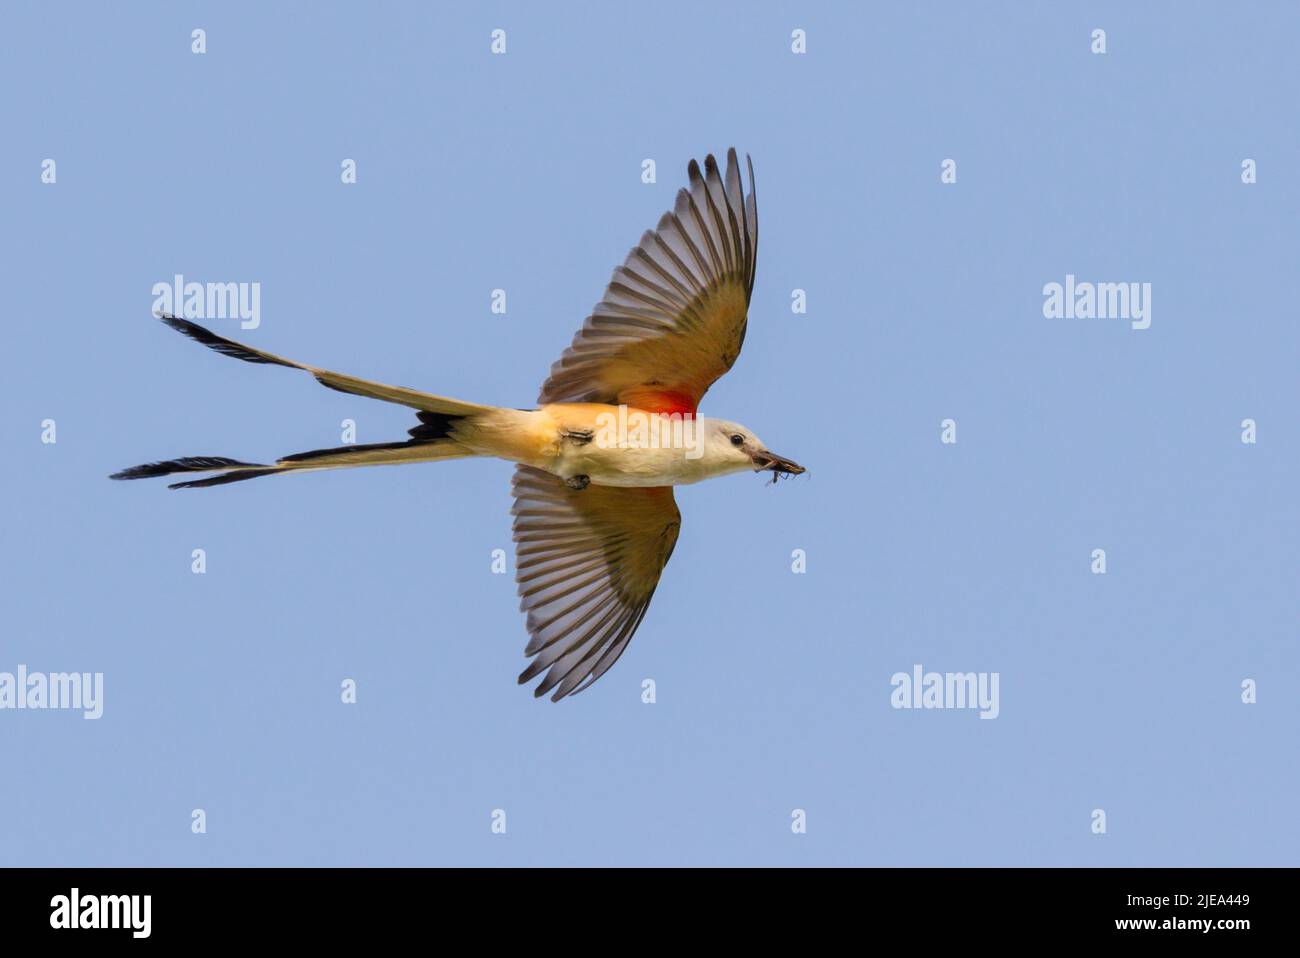 Scissor-tailed flycatcher (Tyrannus forficatus) flying with insect prey in the beak, Galveston, Texas, USA. Stock Photo